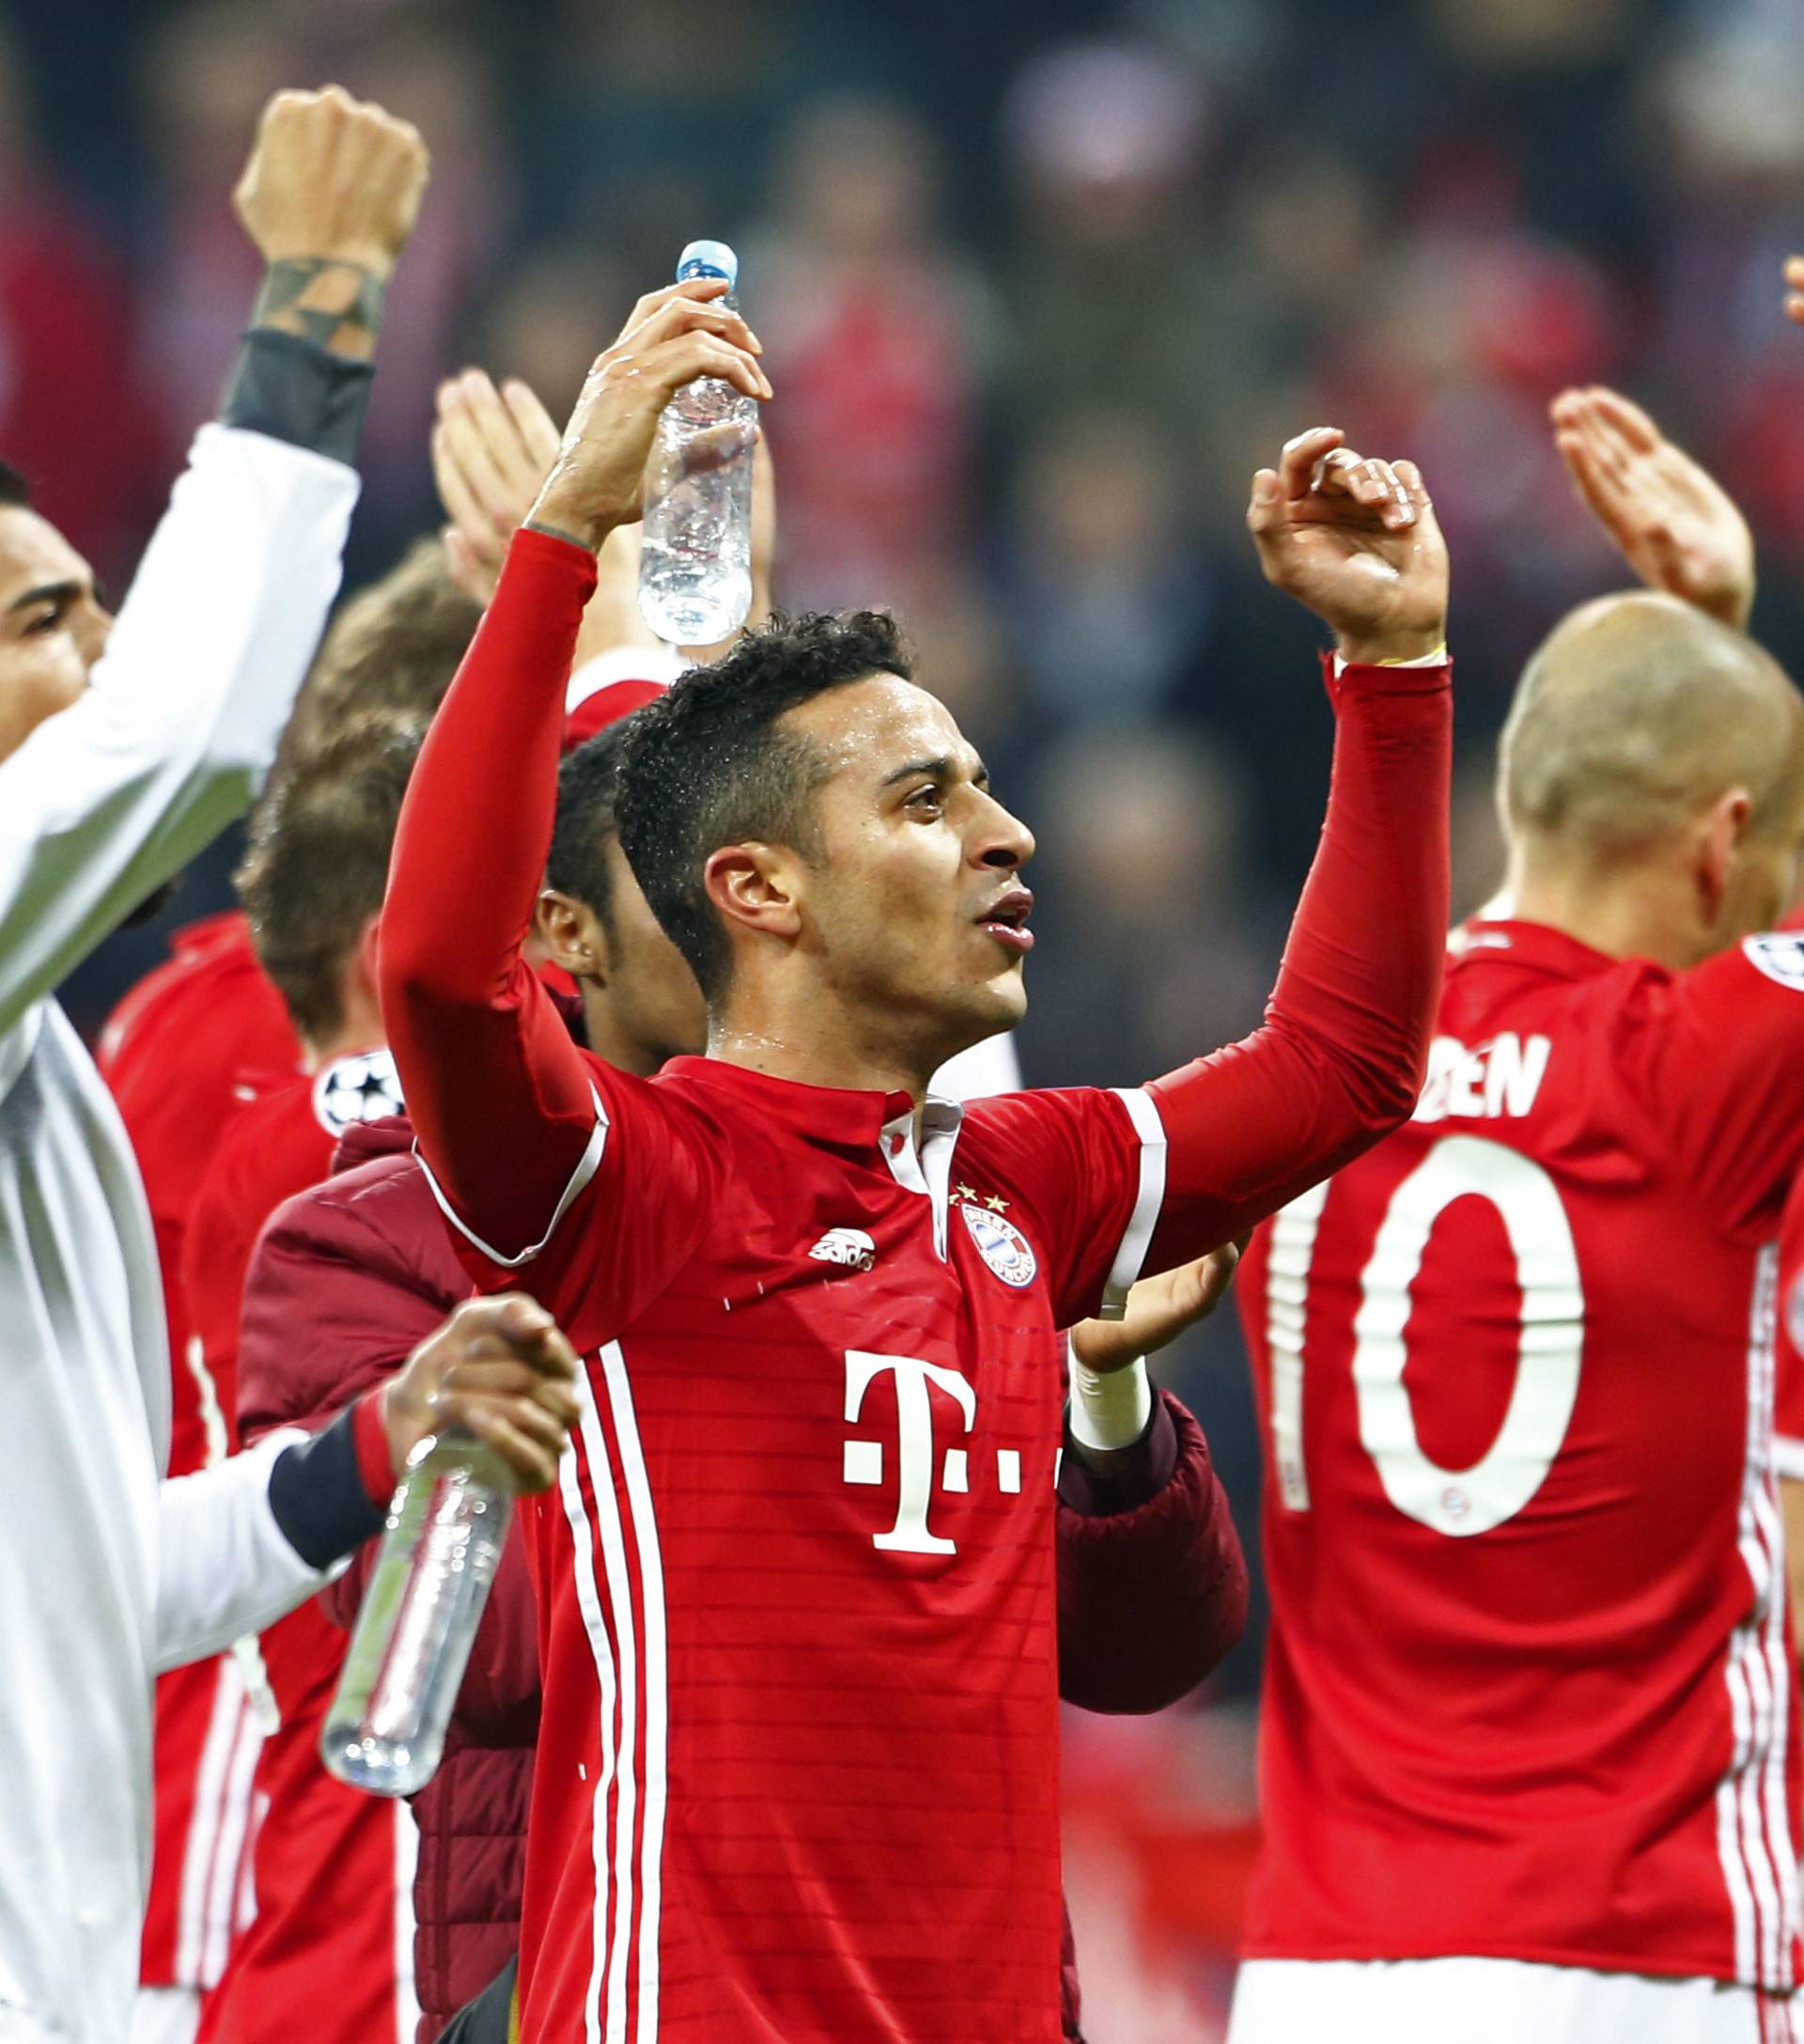 Bayern Munich's Thiago Alcantara celebrates after the game with teammates